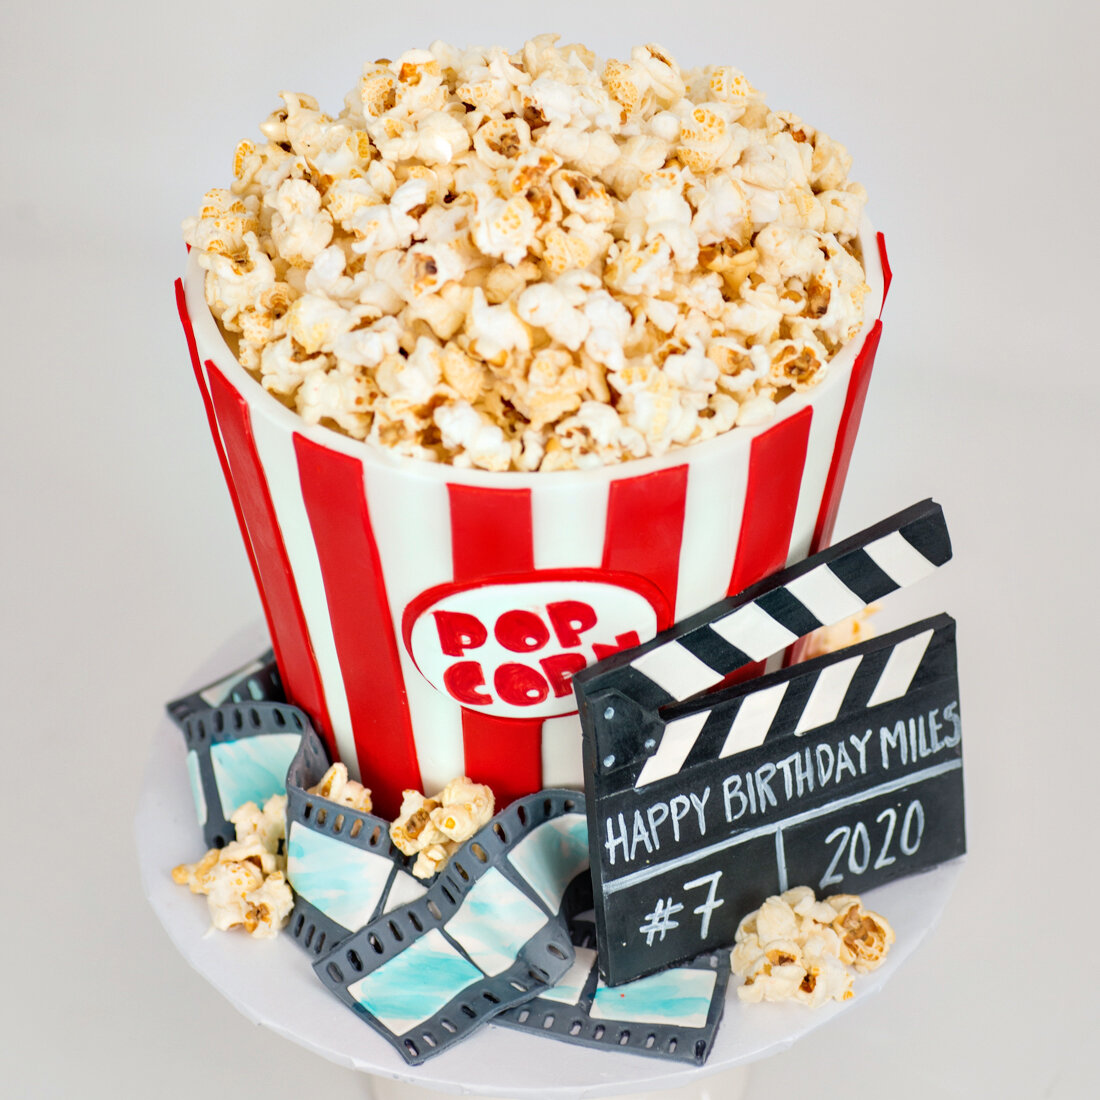 Movie night, popcorn bucket birthday cake